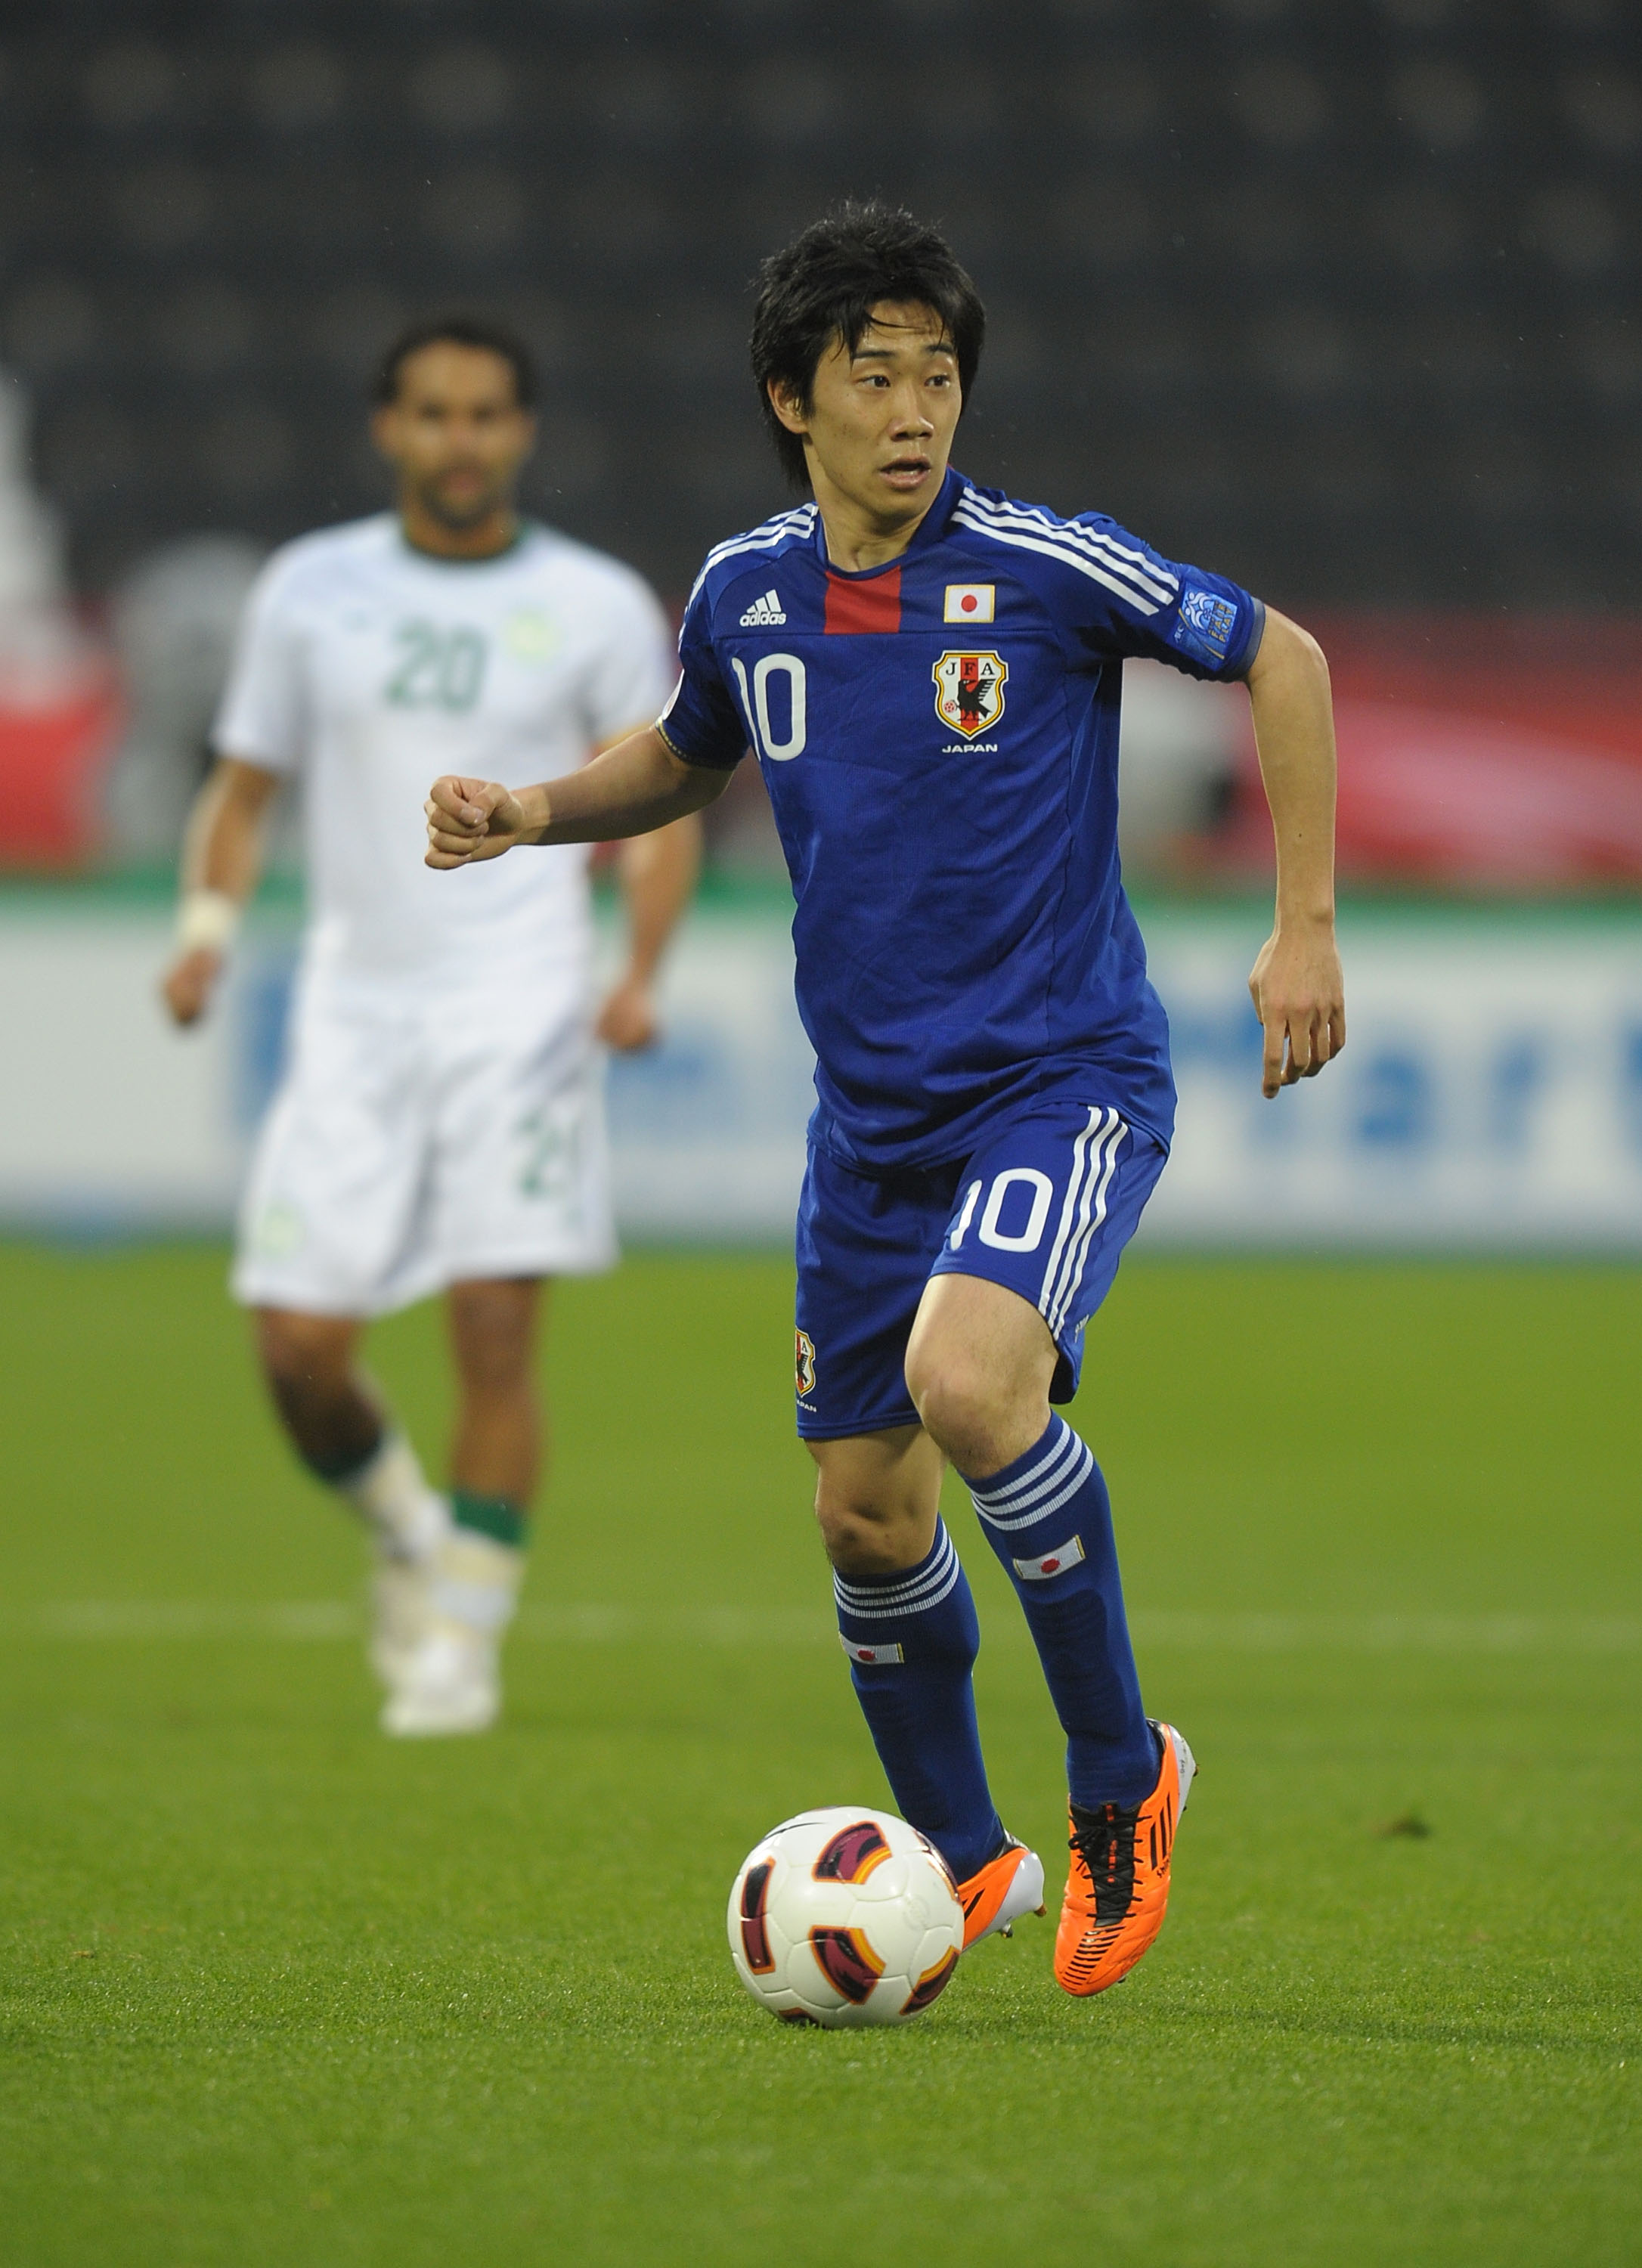 DOHA, QATAR - JANUARY 17: Shinji Kagawa of Japan in action during the AFC Asian Cup Group B match between Saudi Arabia and Japan at Al-Rayyan Stadium on January 17, 2011 in Doha, Qatar.  (Photo by Koki Nagahama/Getty Images)